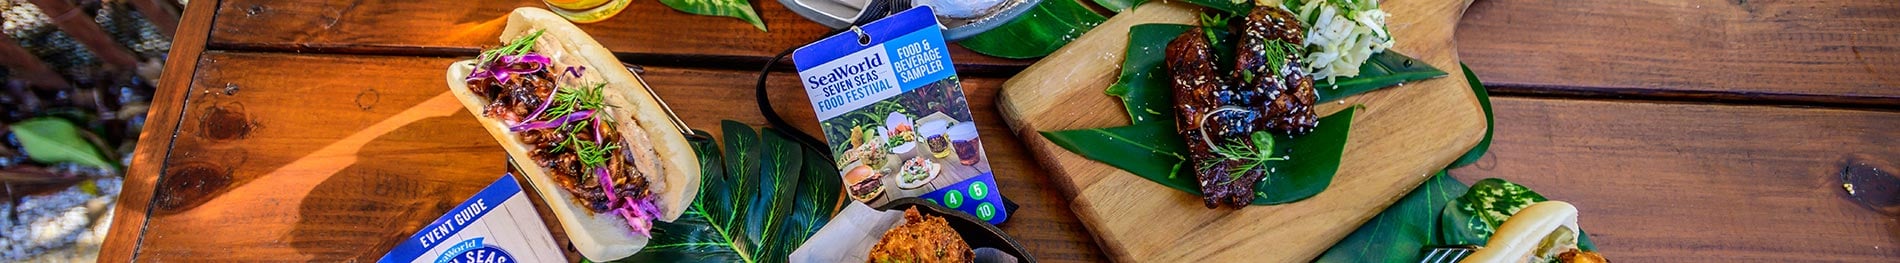 SeaWorld Seven Seas Food Festival Samples